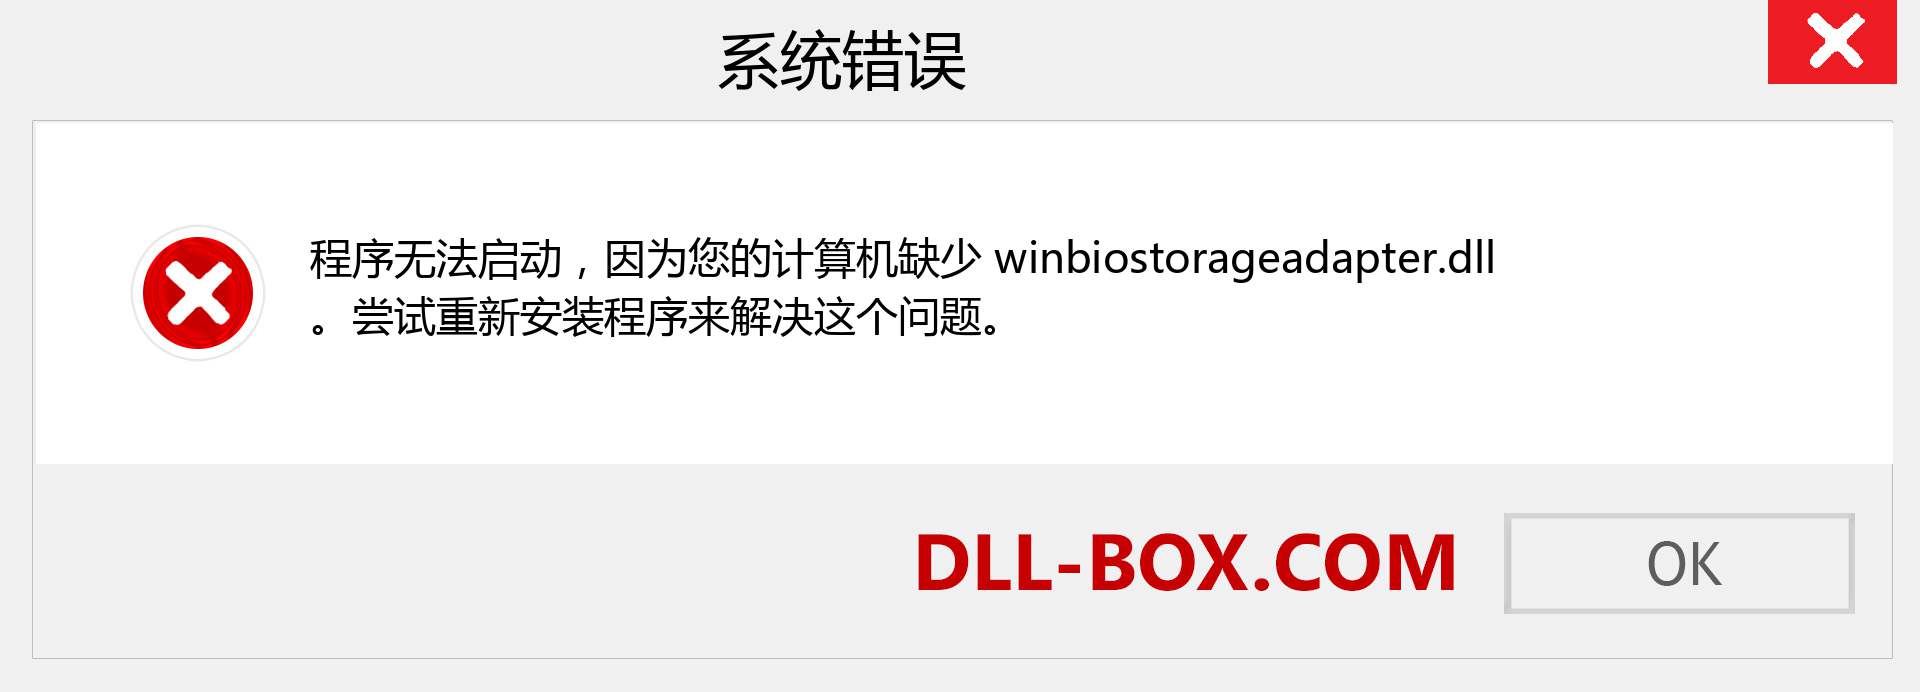 winbiostorageadapter.dll 文件丢失？。 适用于 Windows 7、8、10 的下载 - 修复 Windows、照片、图像上的 winbiostorageadapter dll 丢失错误